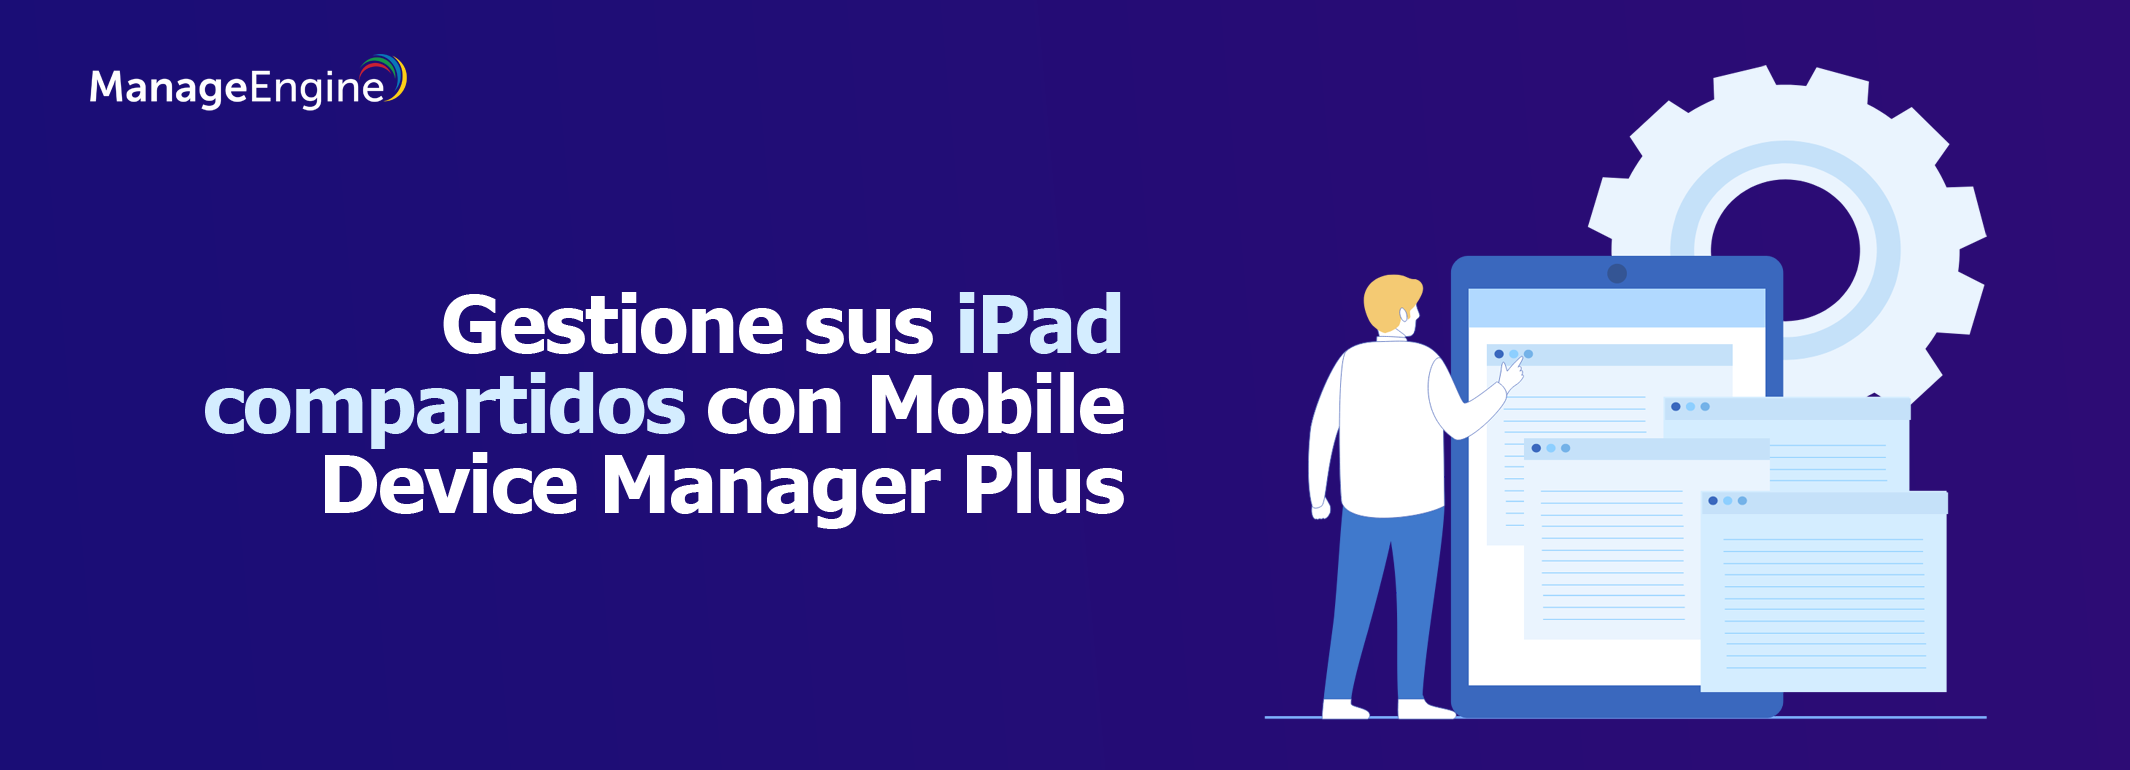 Gestione sus IPad compartidos con Mobile Device Manager Plus